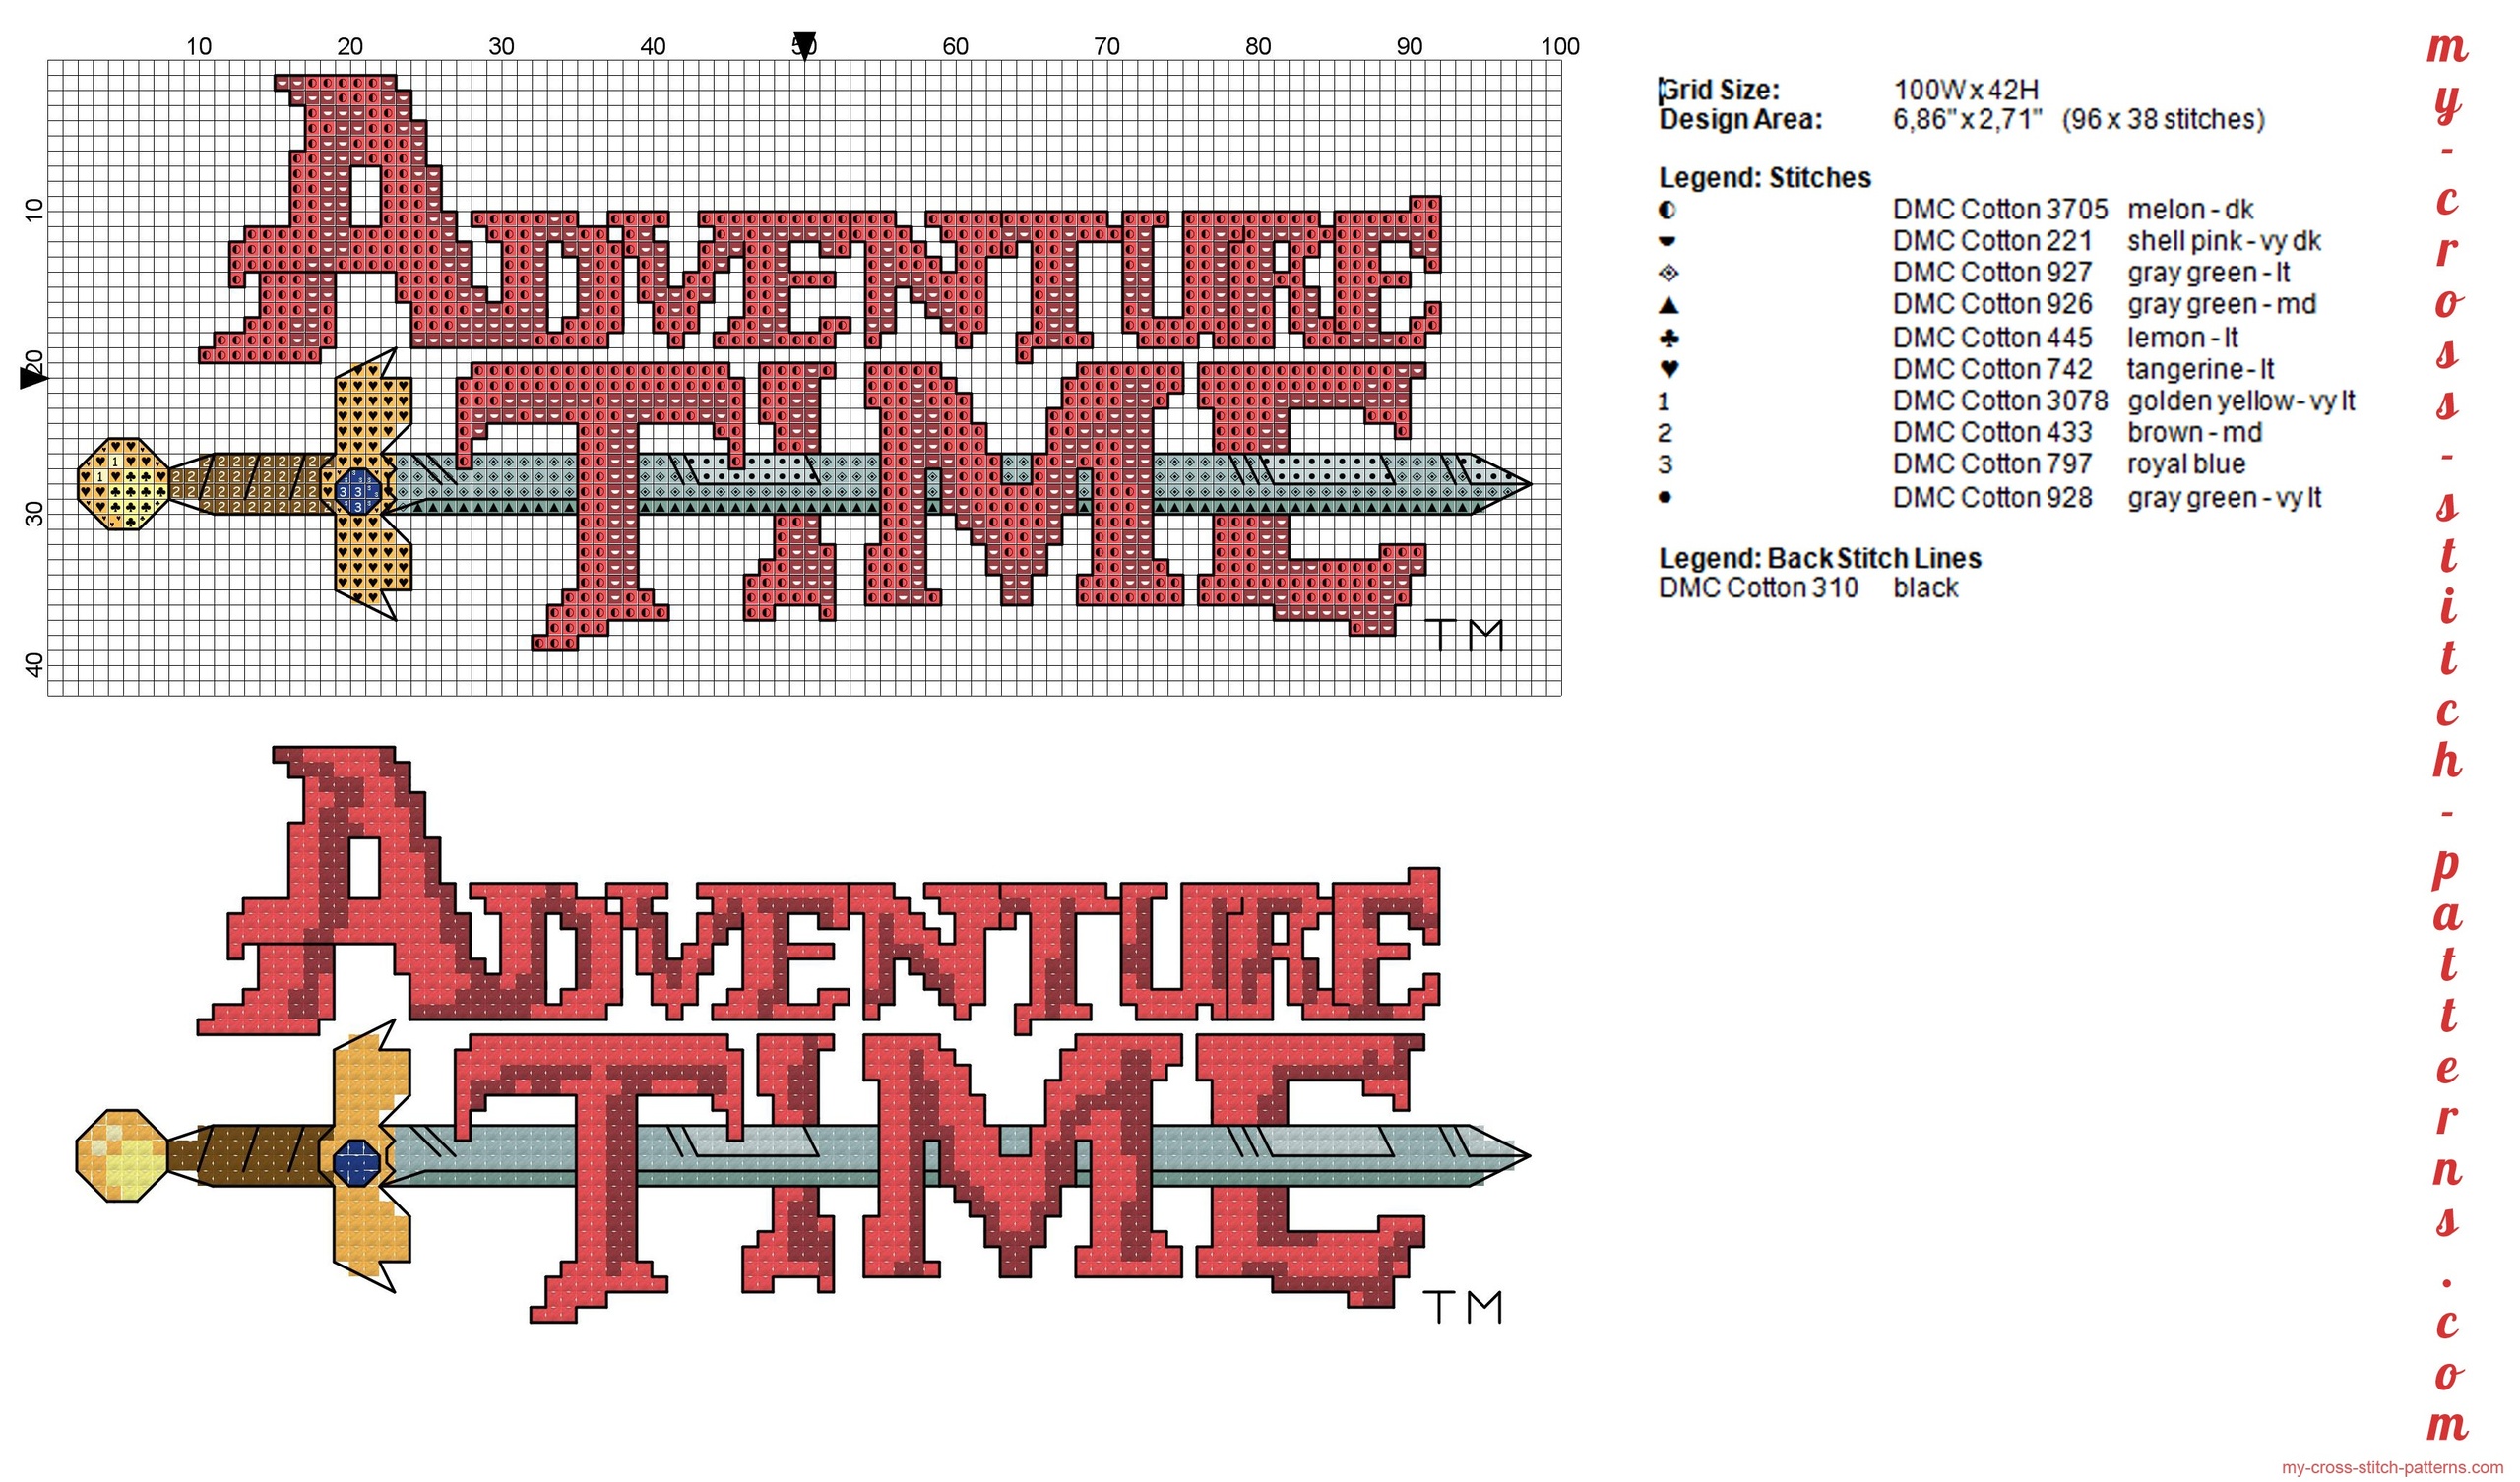 adventure_time_logo_text_cross_stitch_pattern